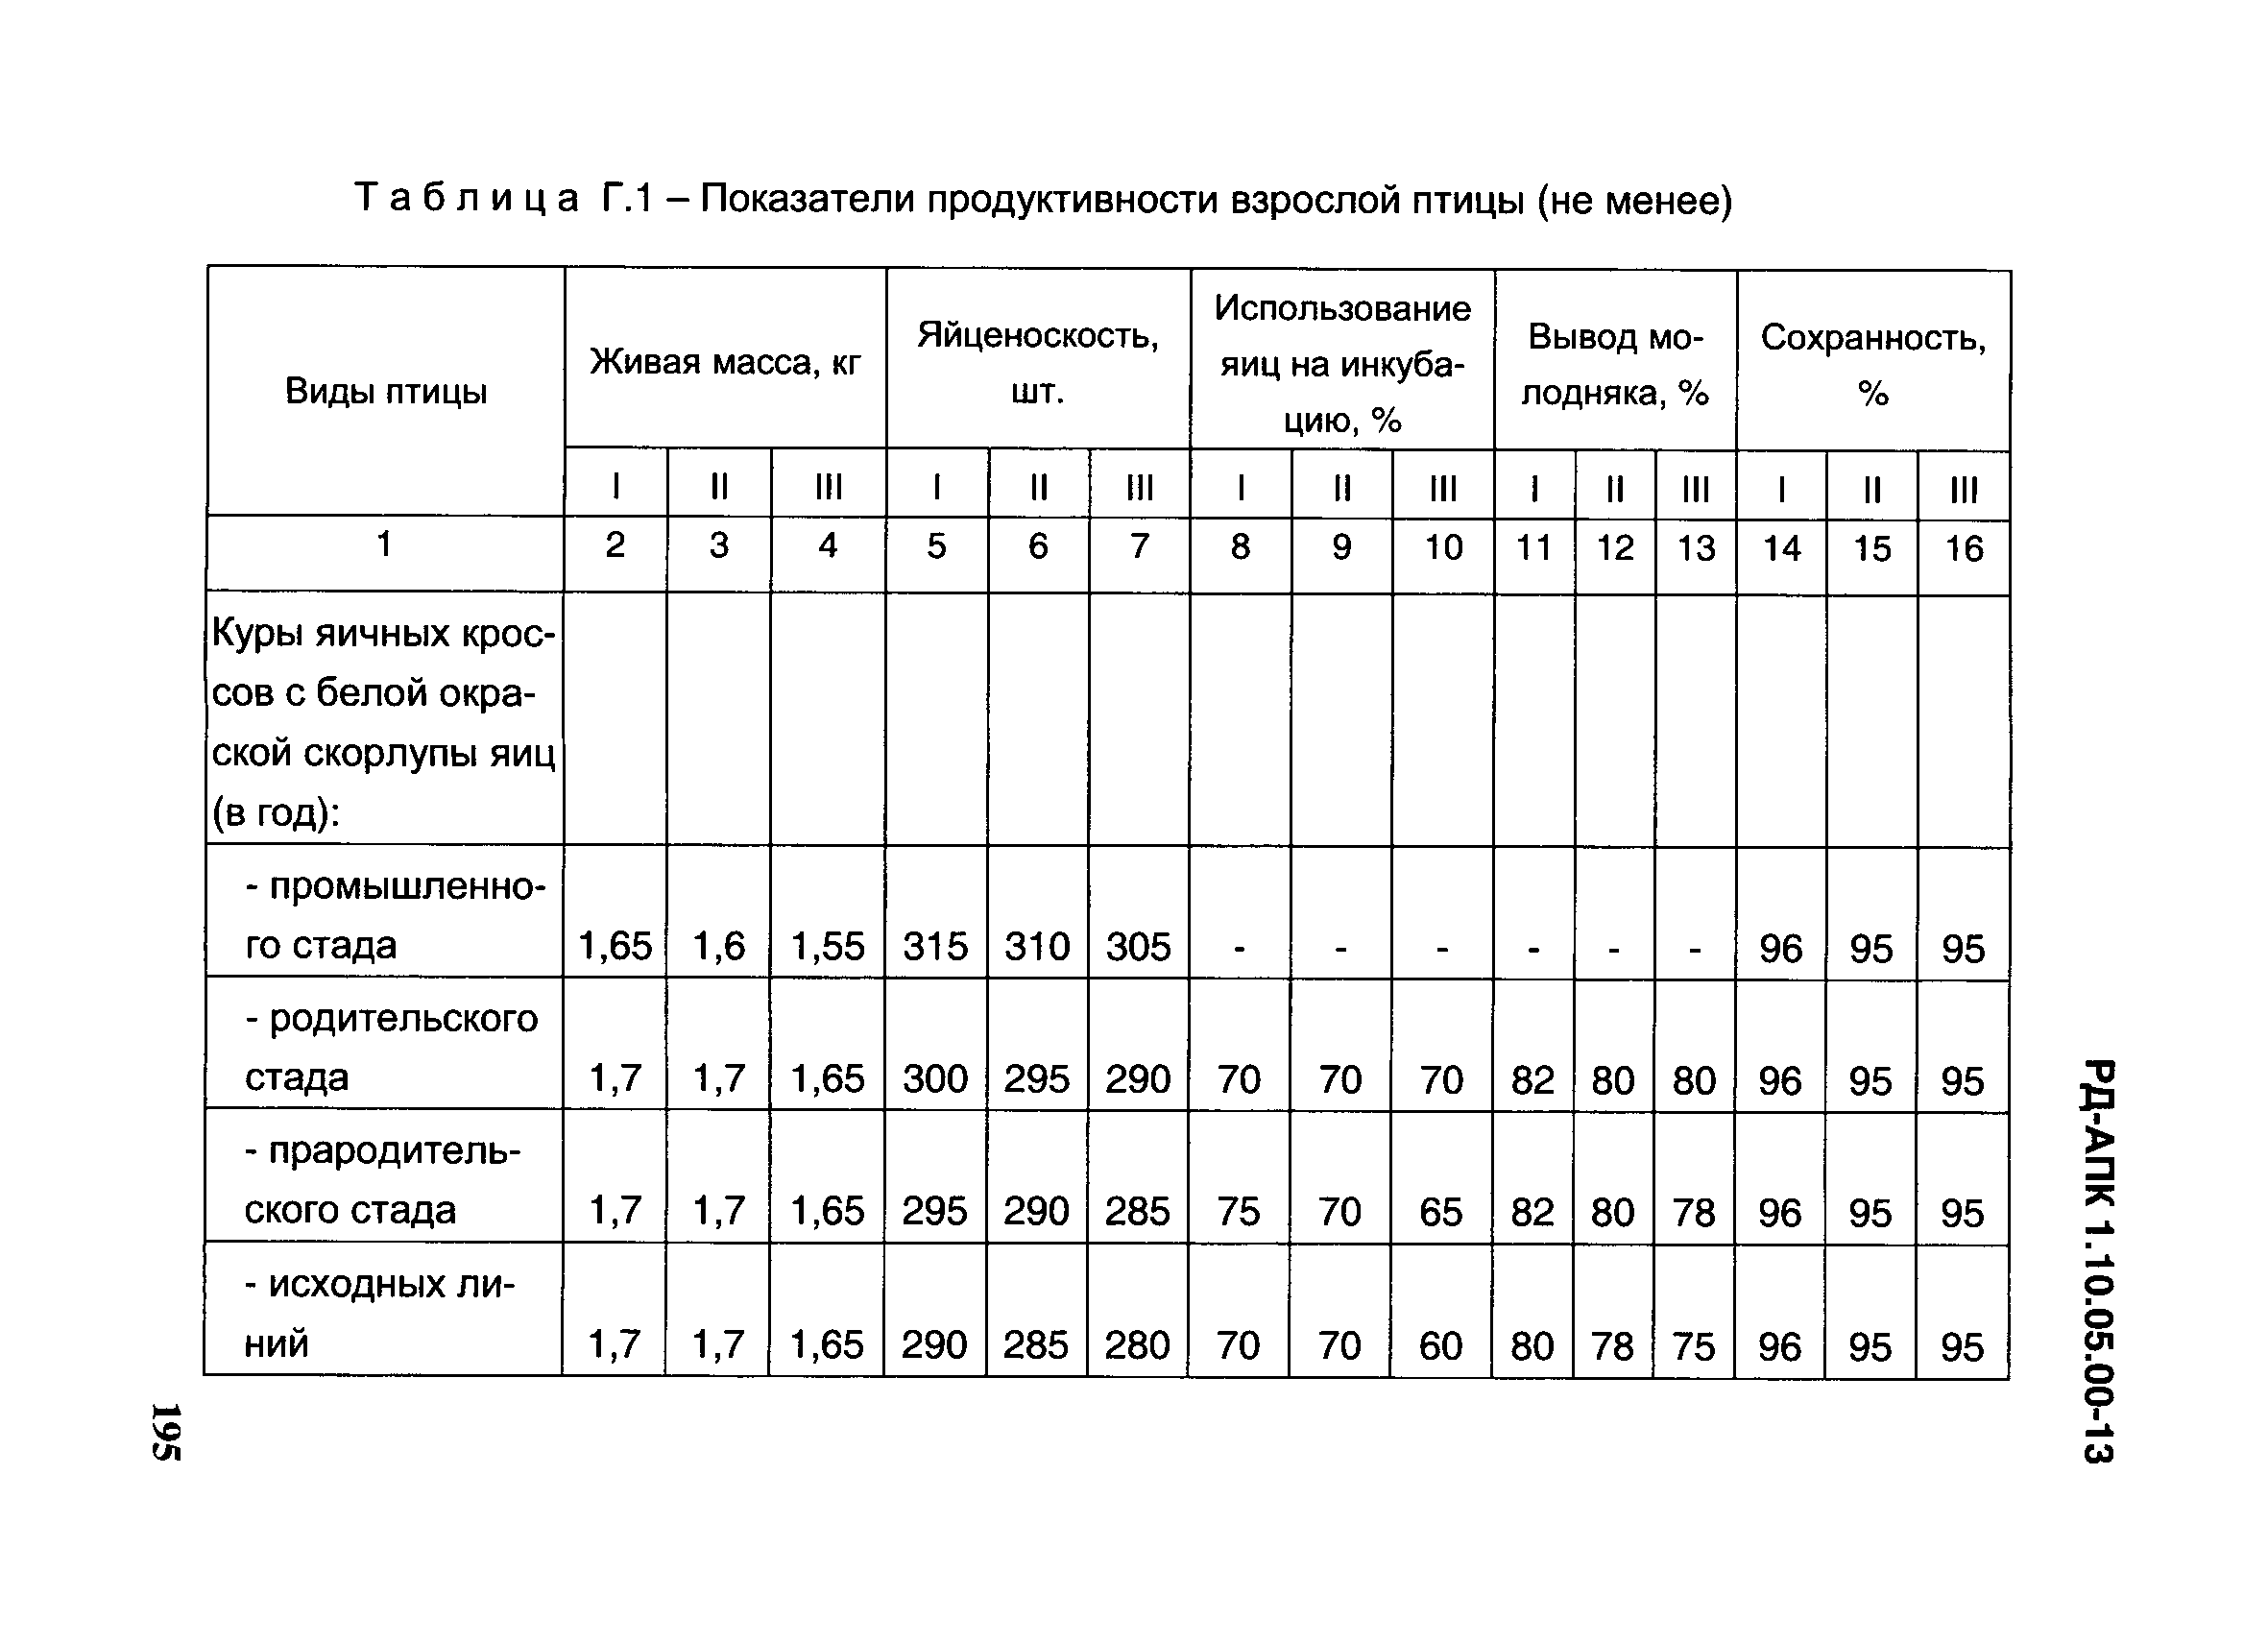 РД-АПК 1.10.05.04-13